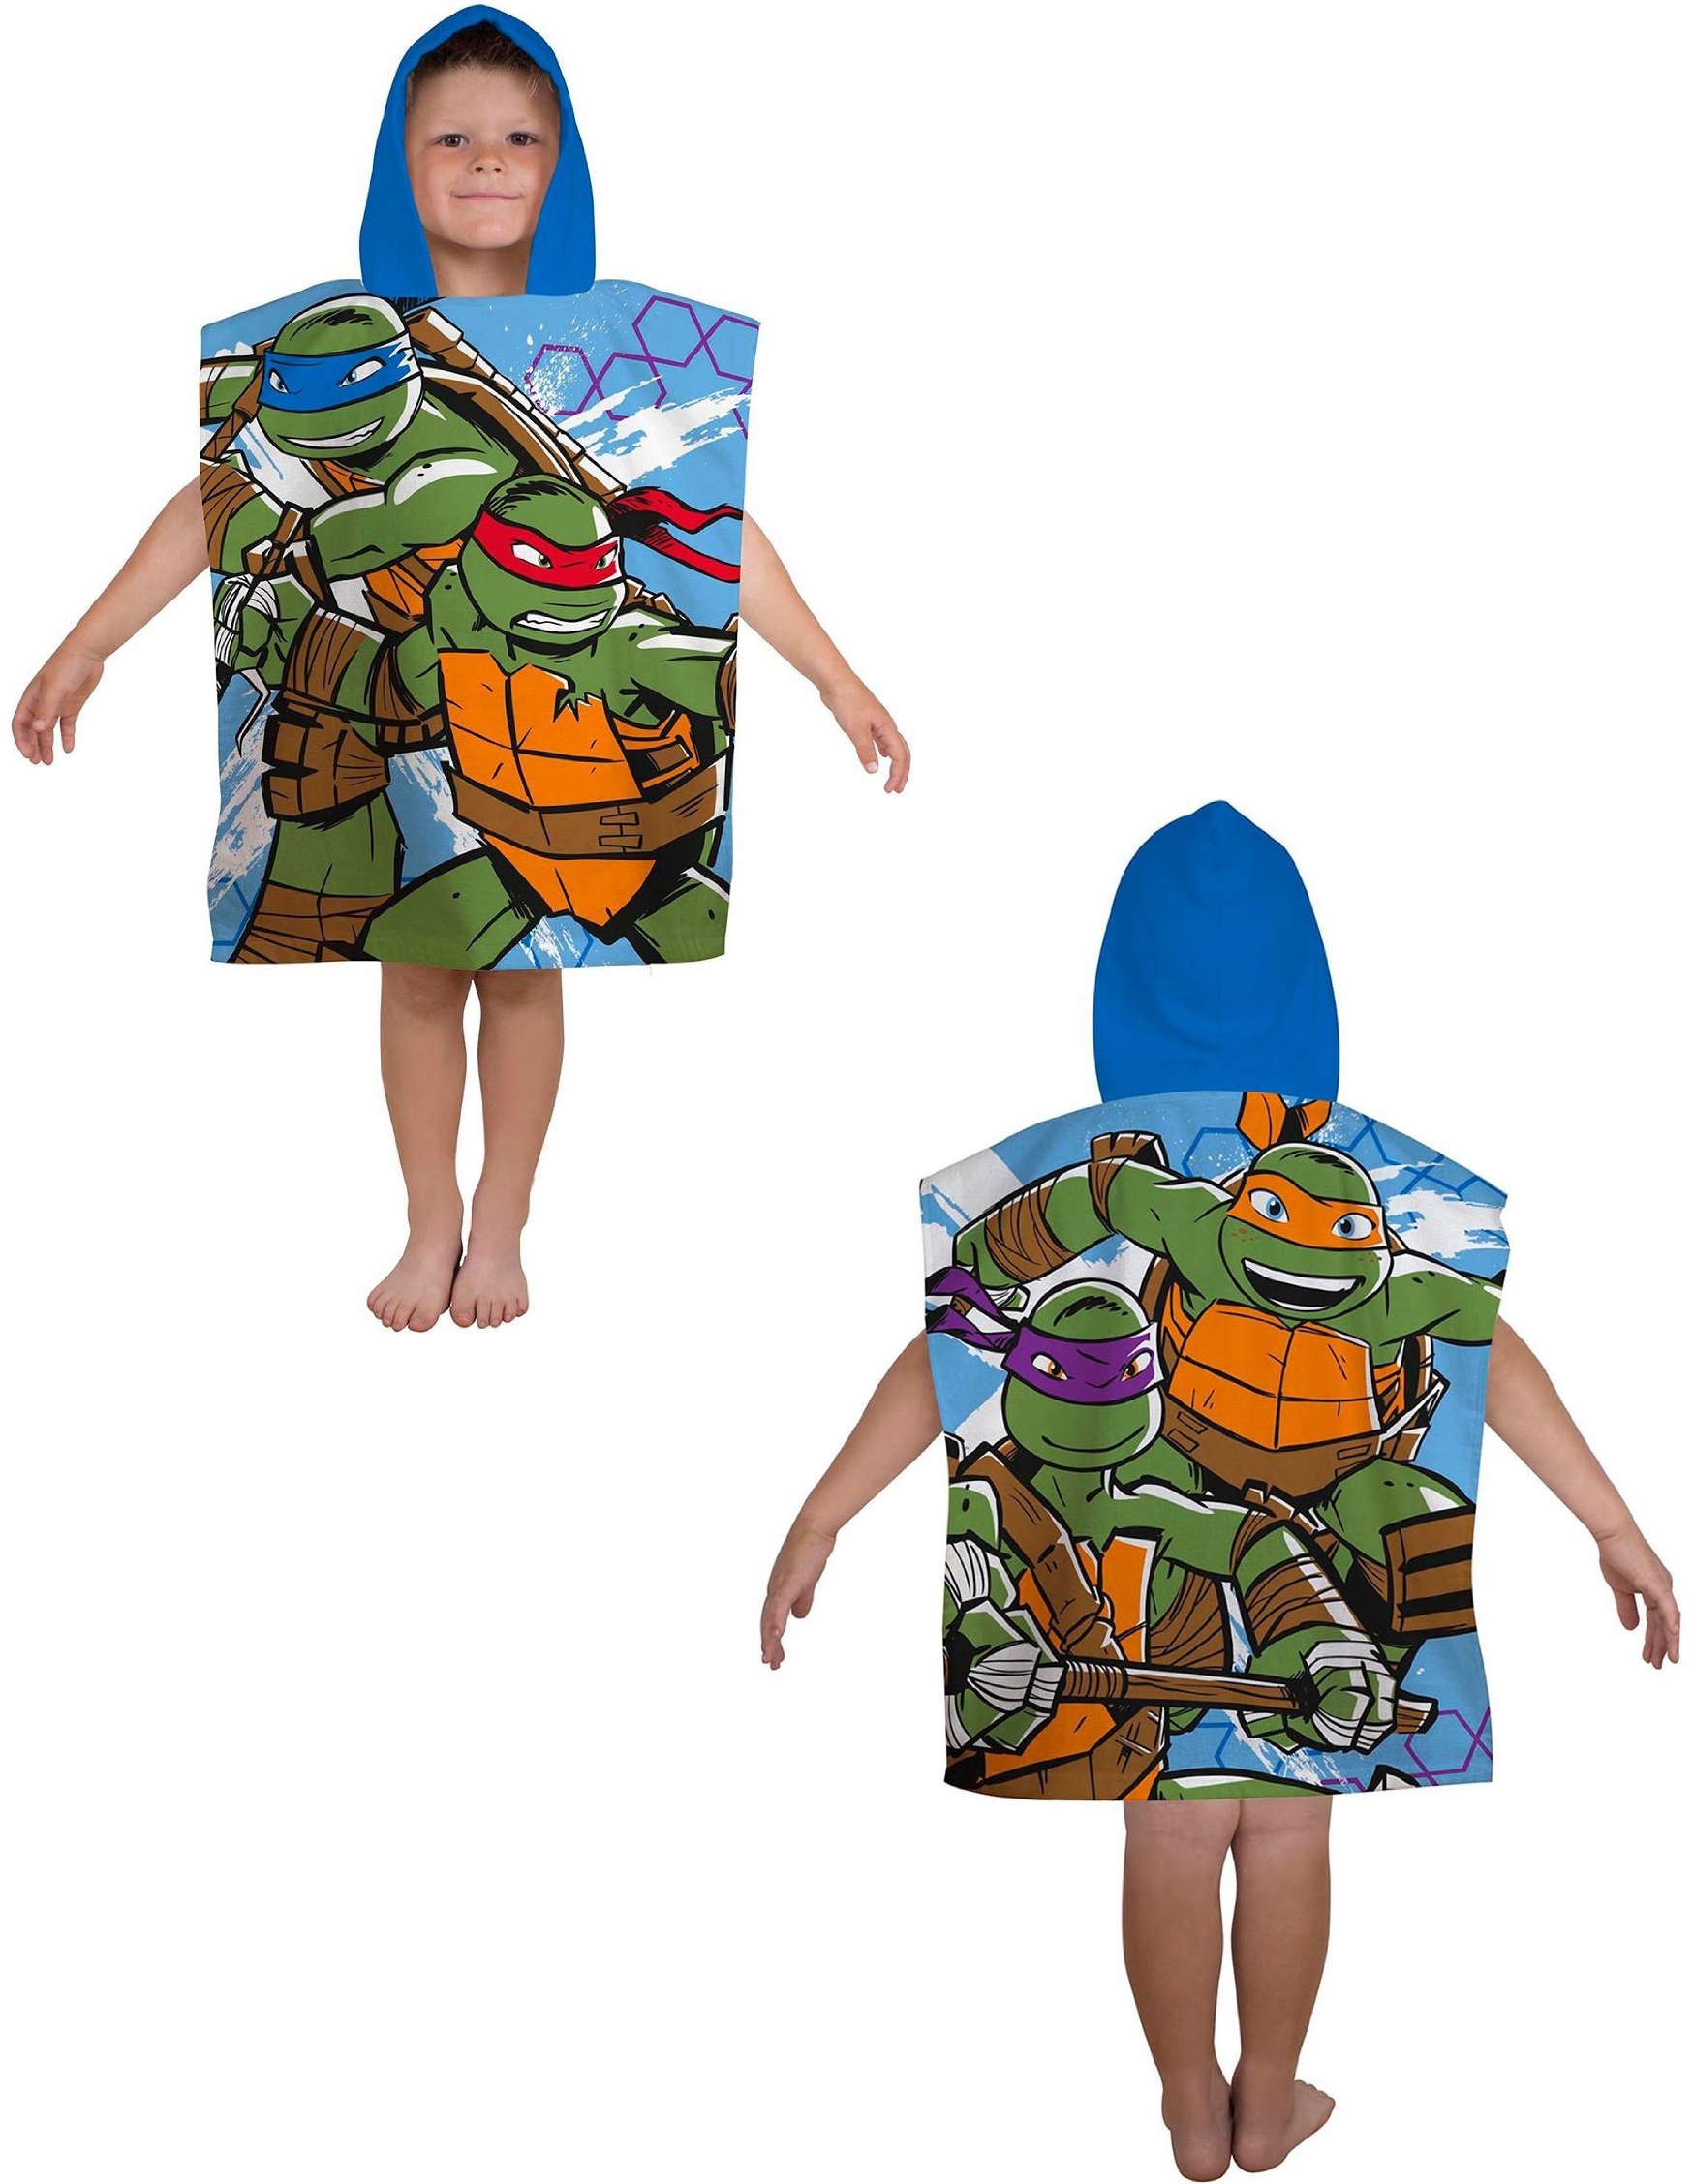 baby ninja turtle towel